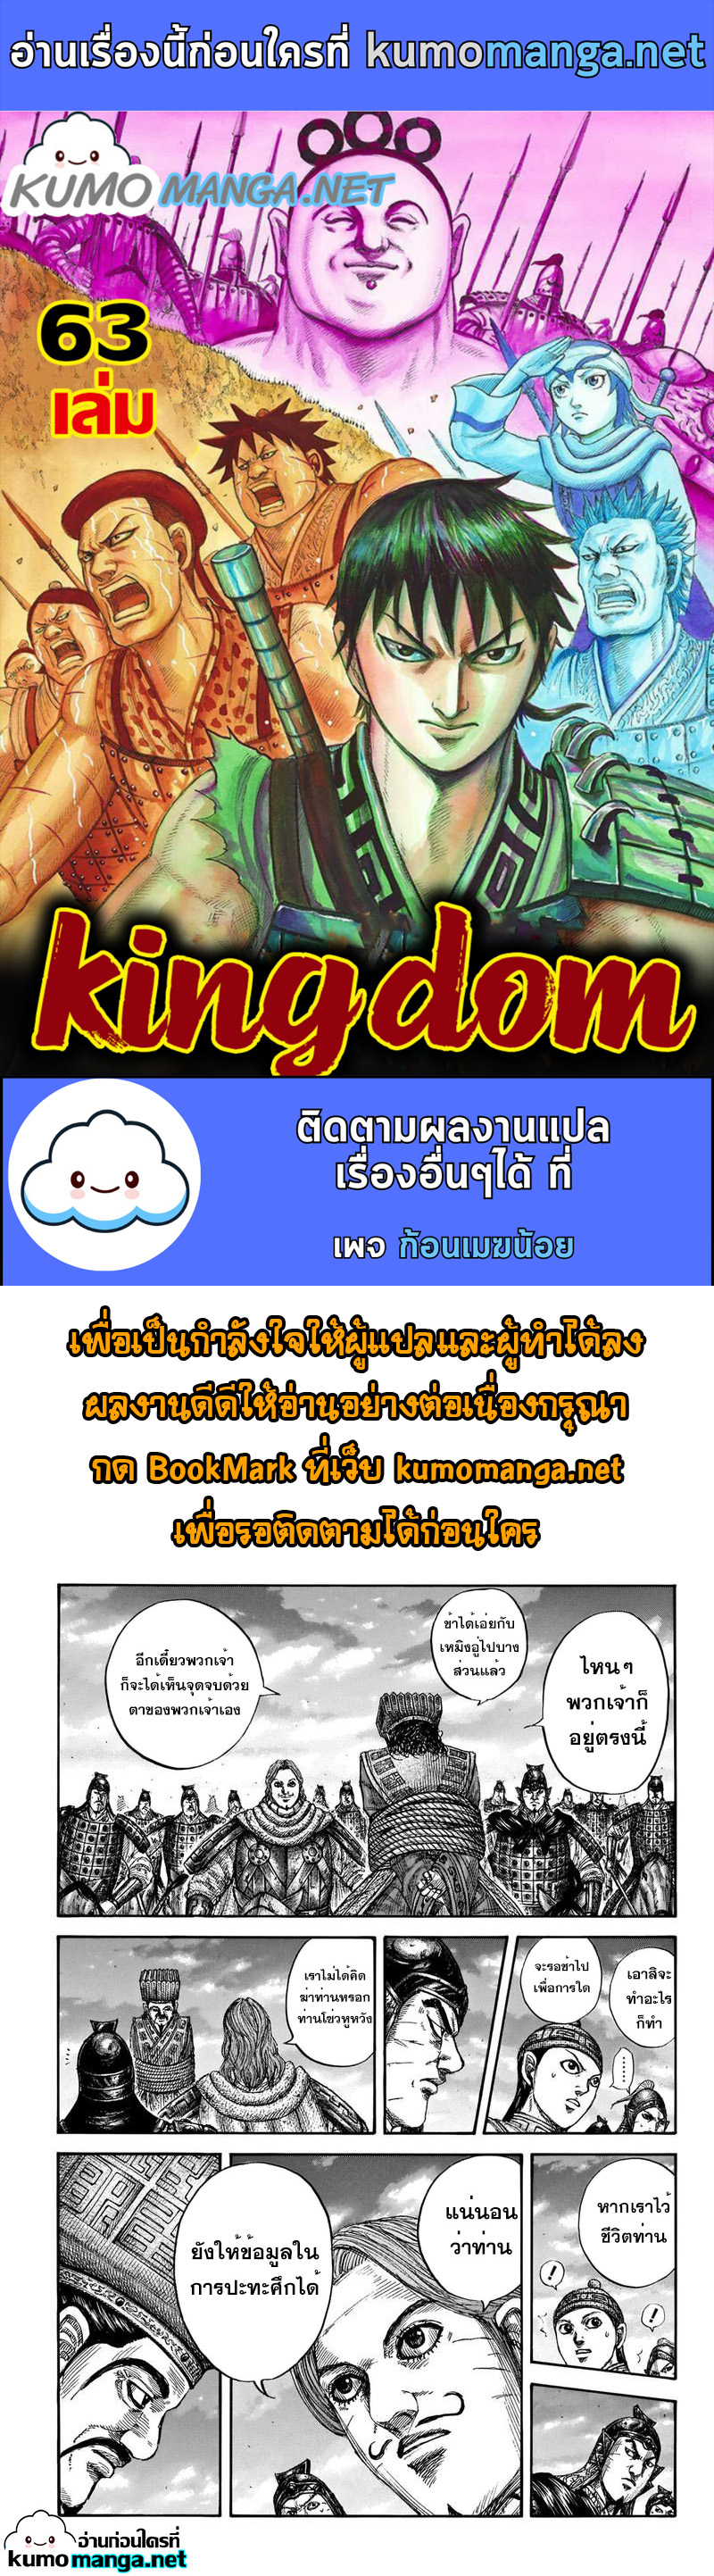 Kingdom 661 (1)